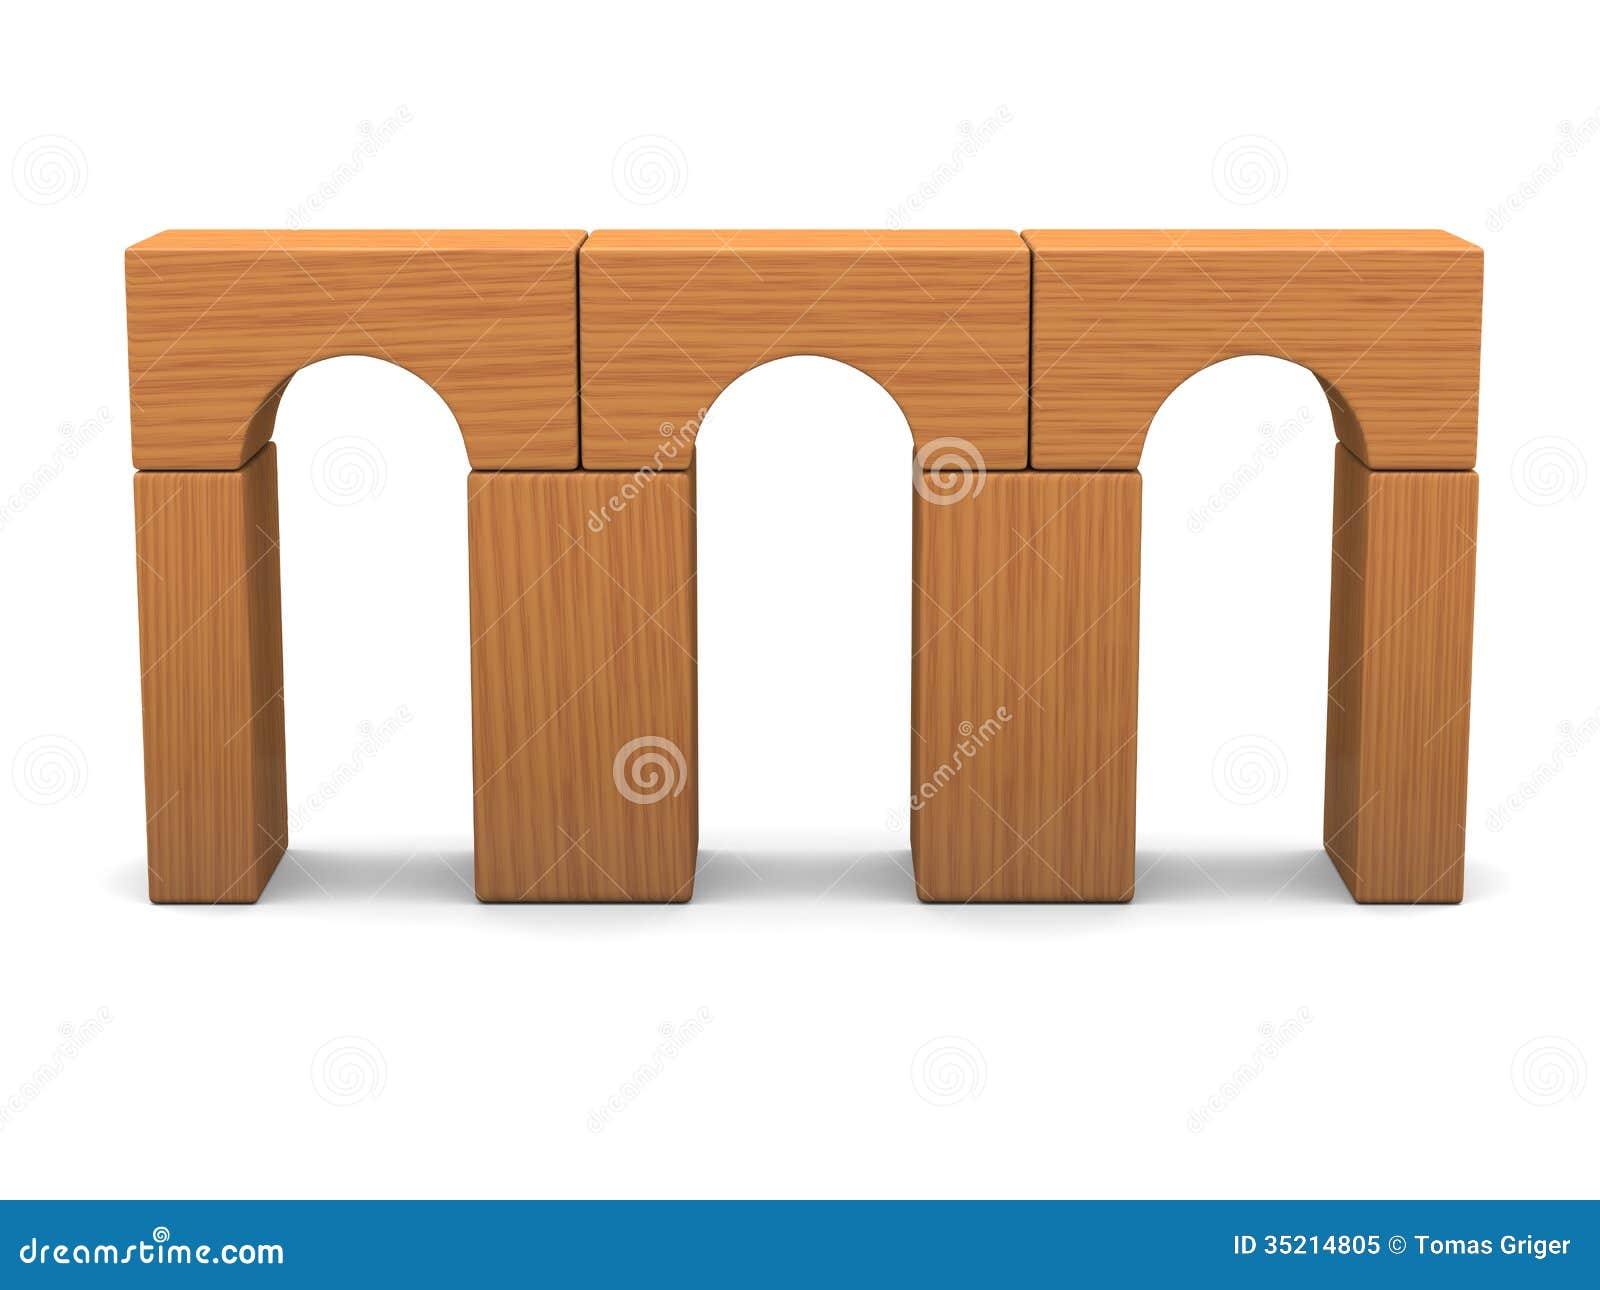 Toy bridge made of wooden blocks isolated on white background.